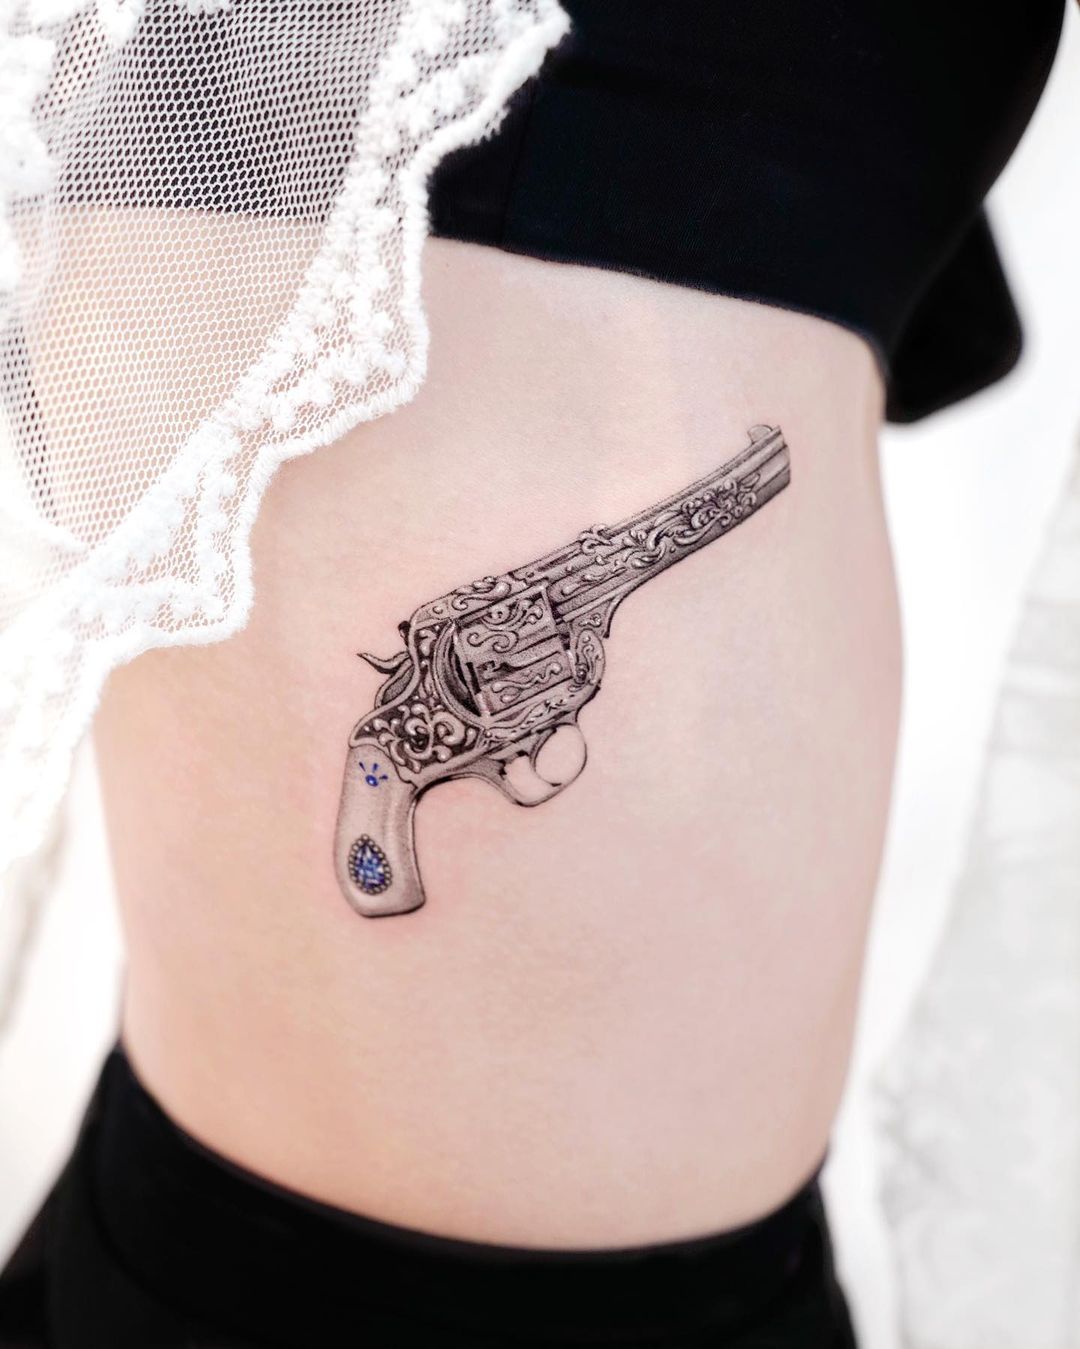 Cute gun tattoo design by tattooist solar